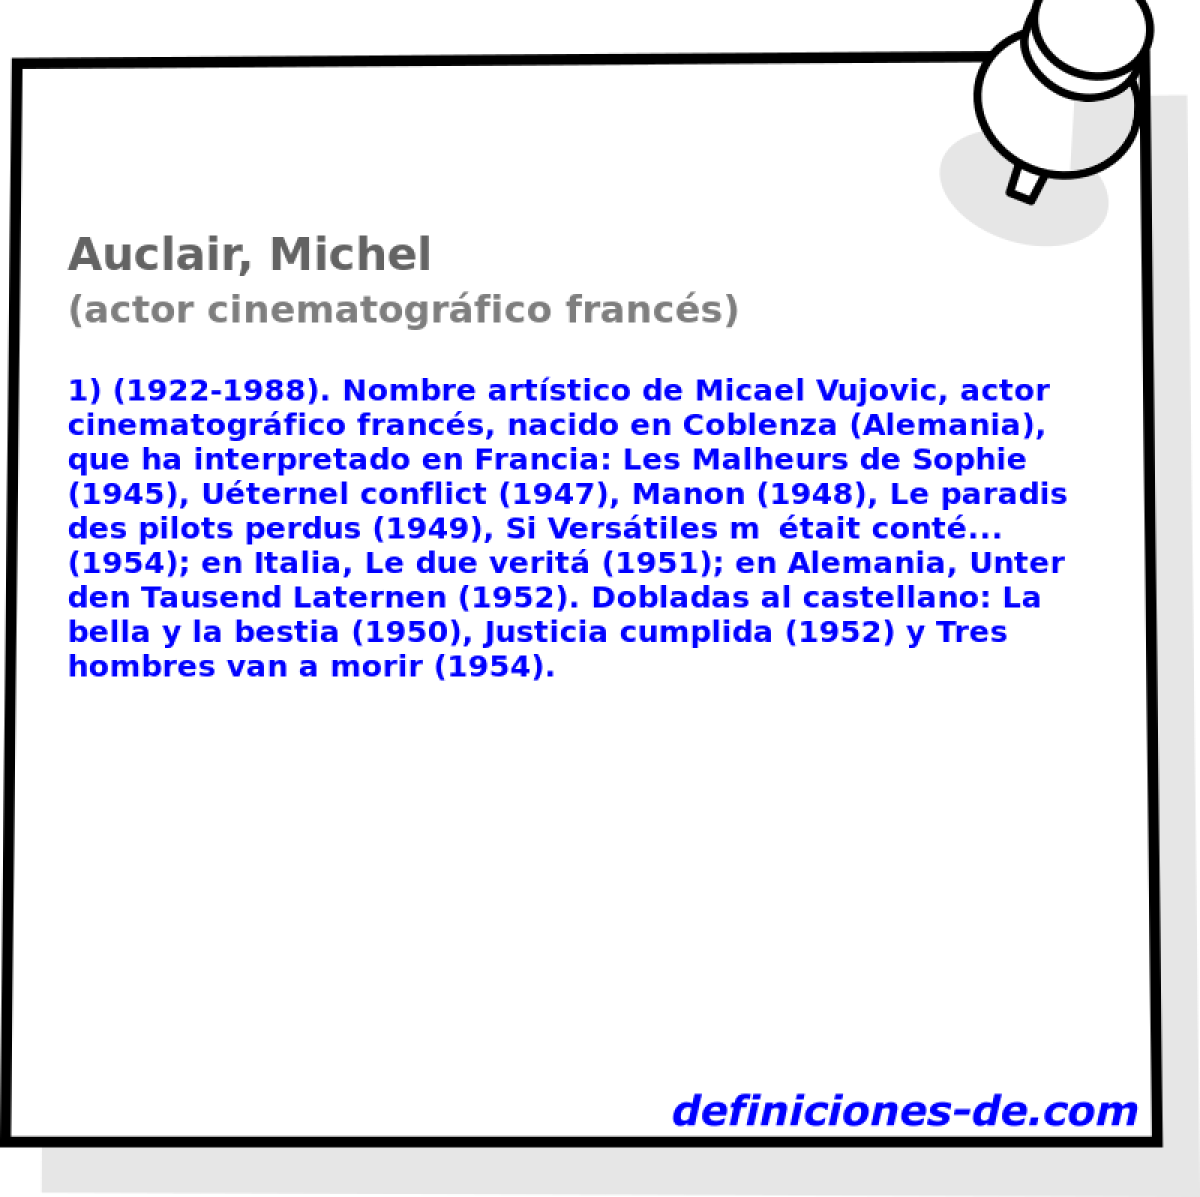 Auclair, Michel (actor cinematogrfico francs)